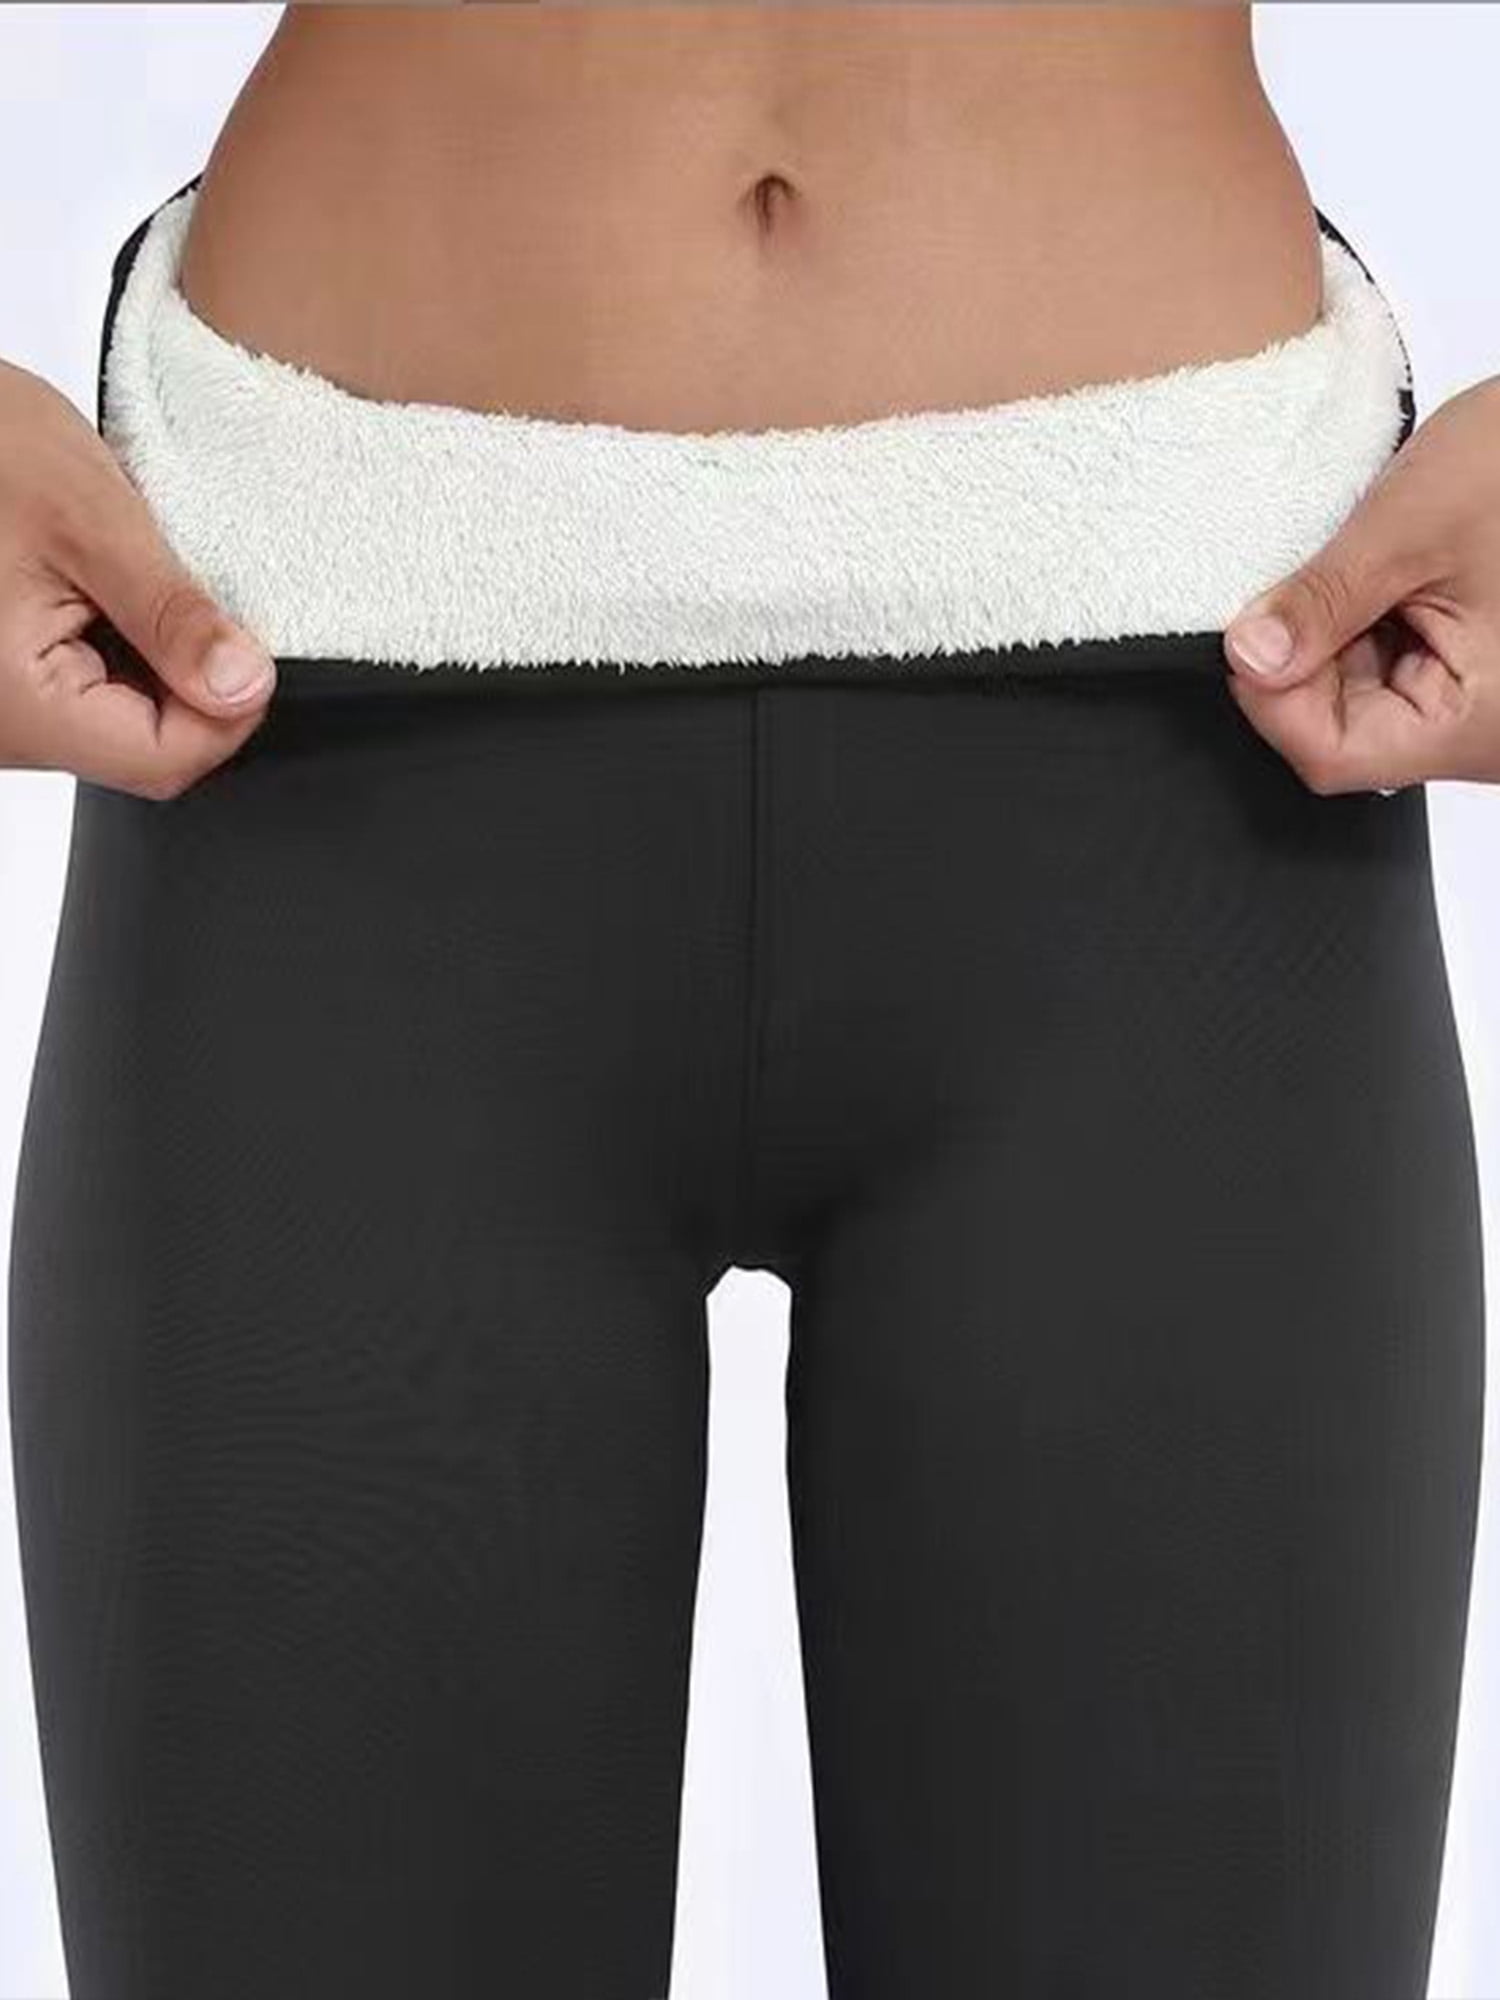 Women's Thick Thermal Leggings Slimming Winter Pants,Light gray,M 